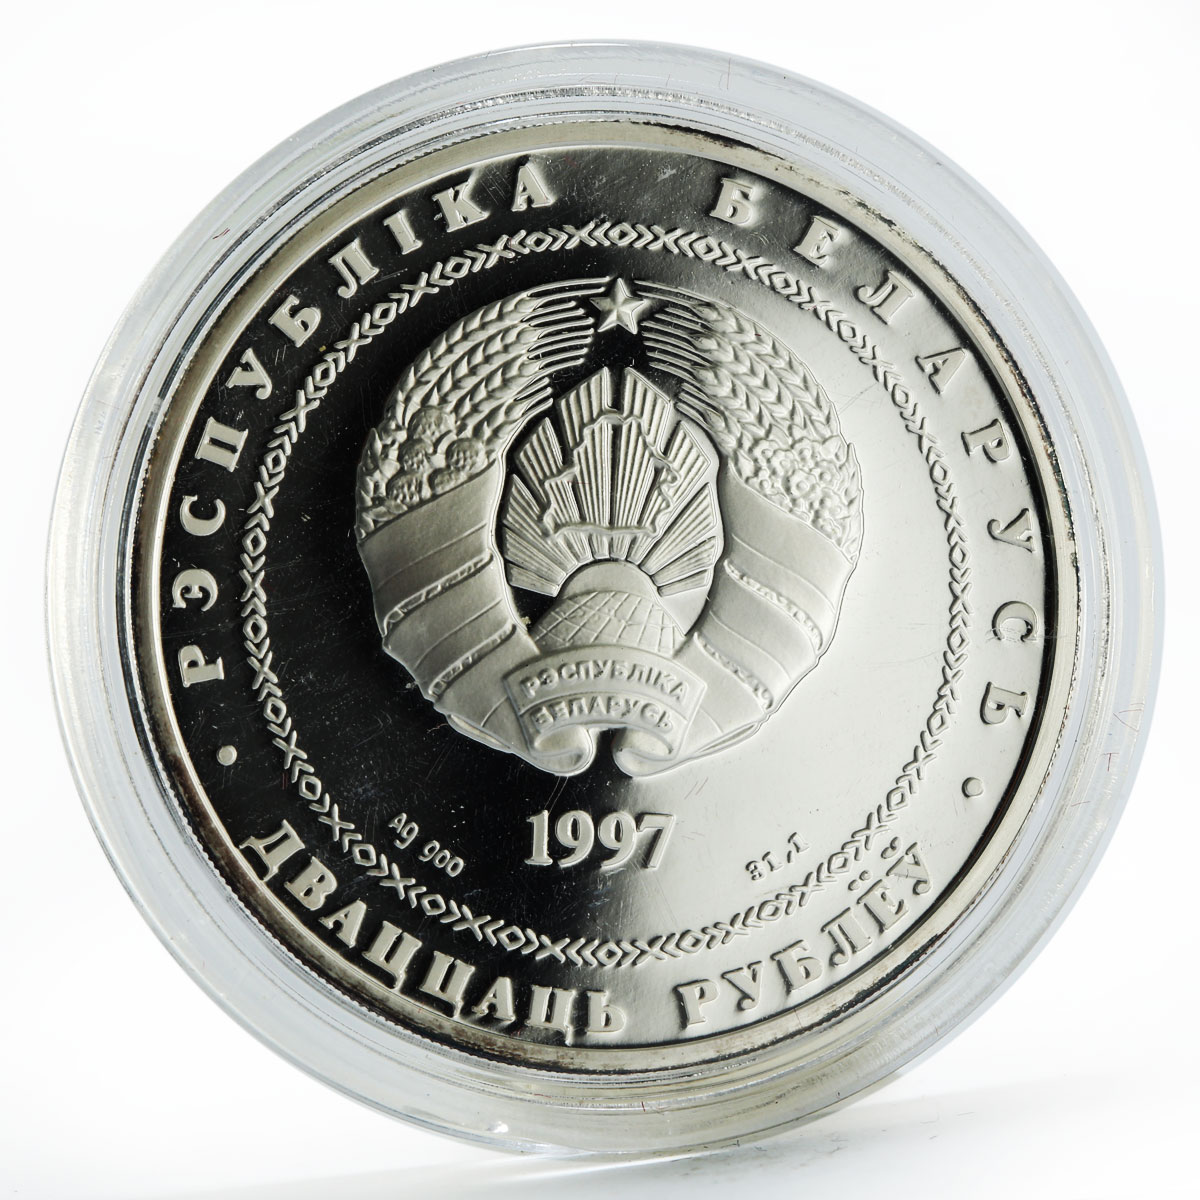 Belarus 20 rubles Belarus-Russia Community proof silver coin 1997